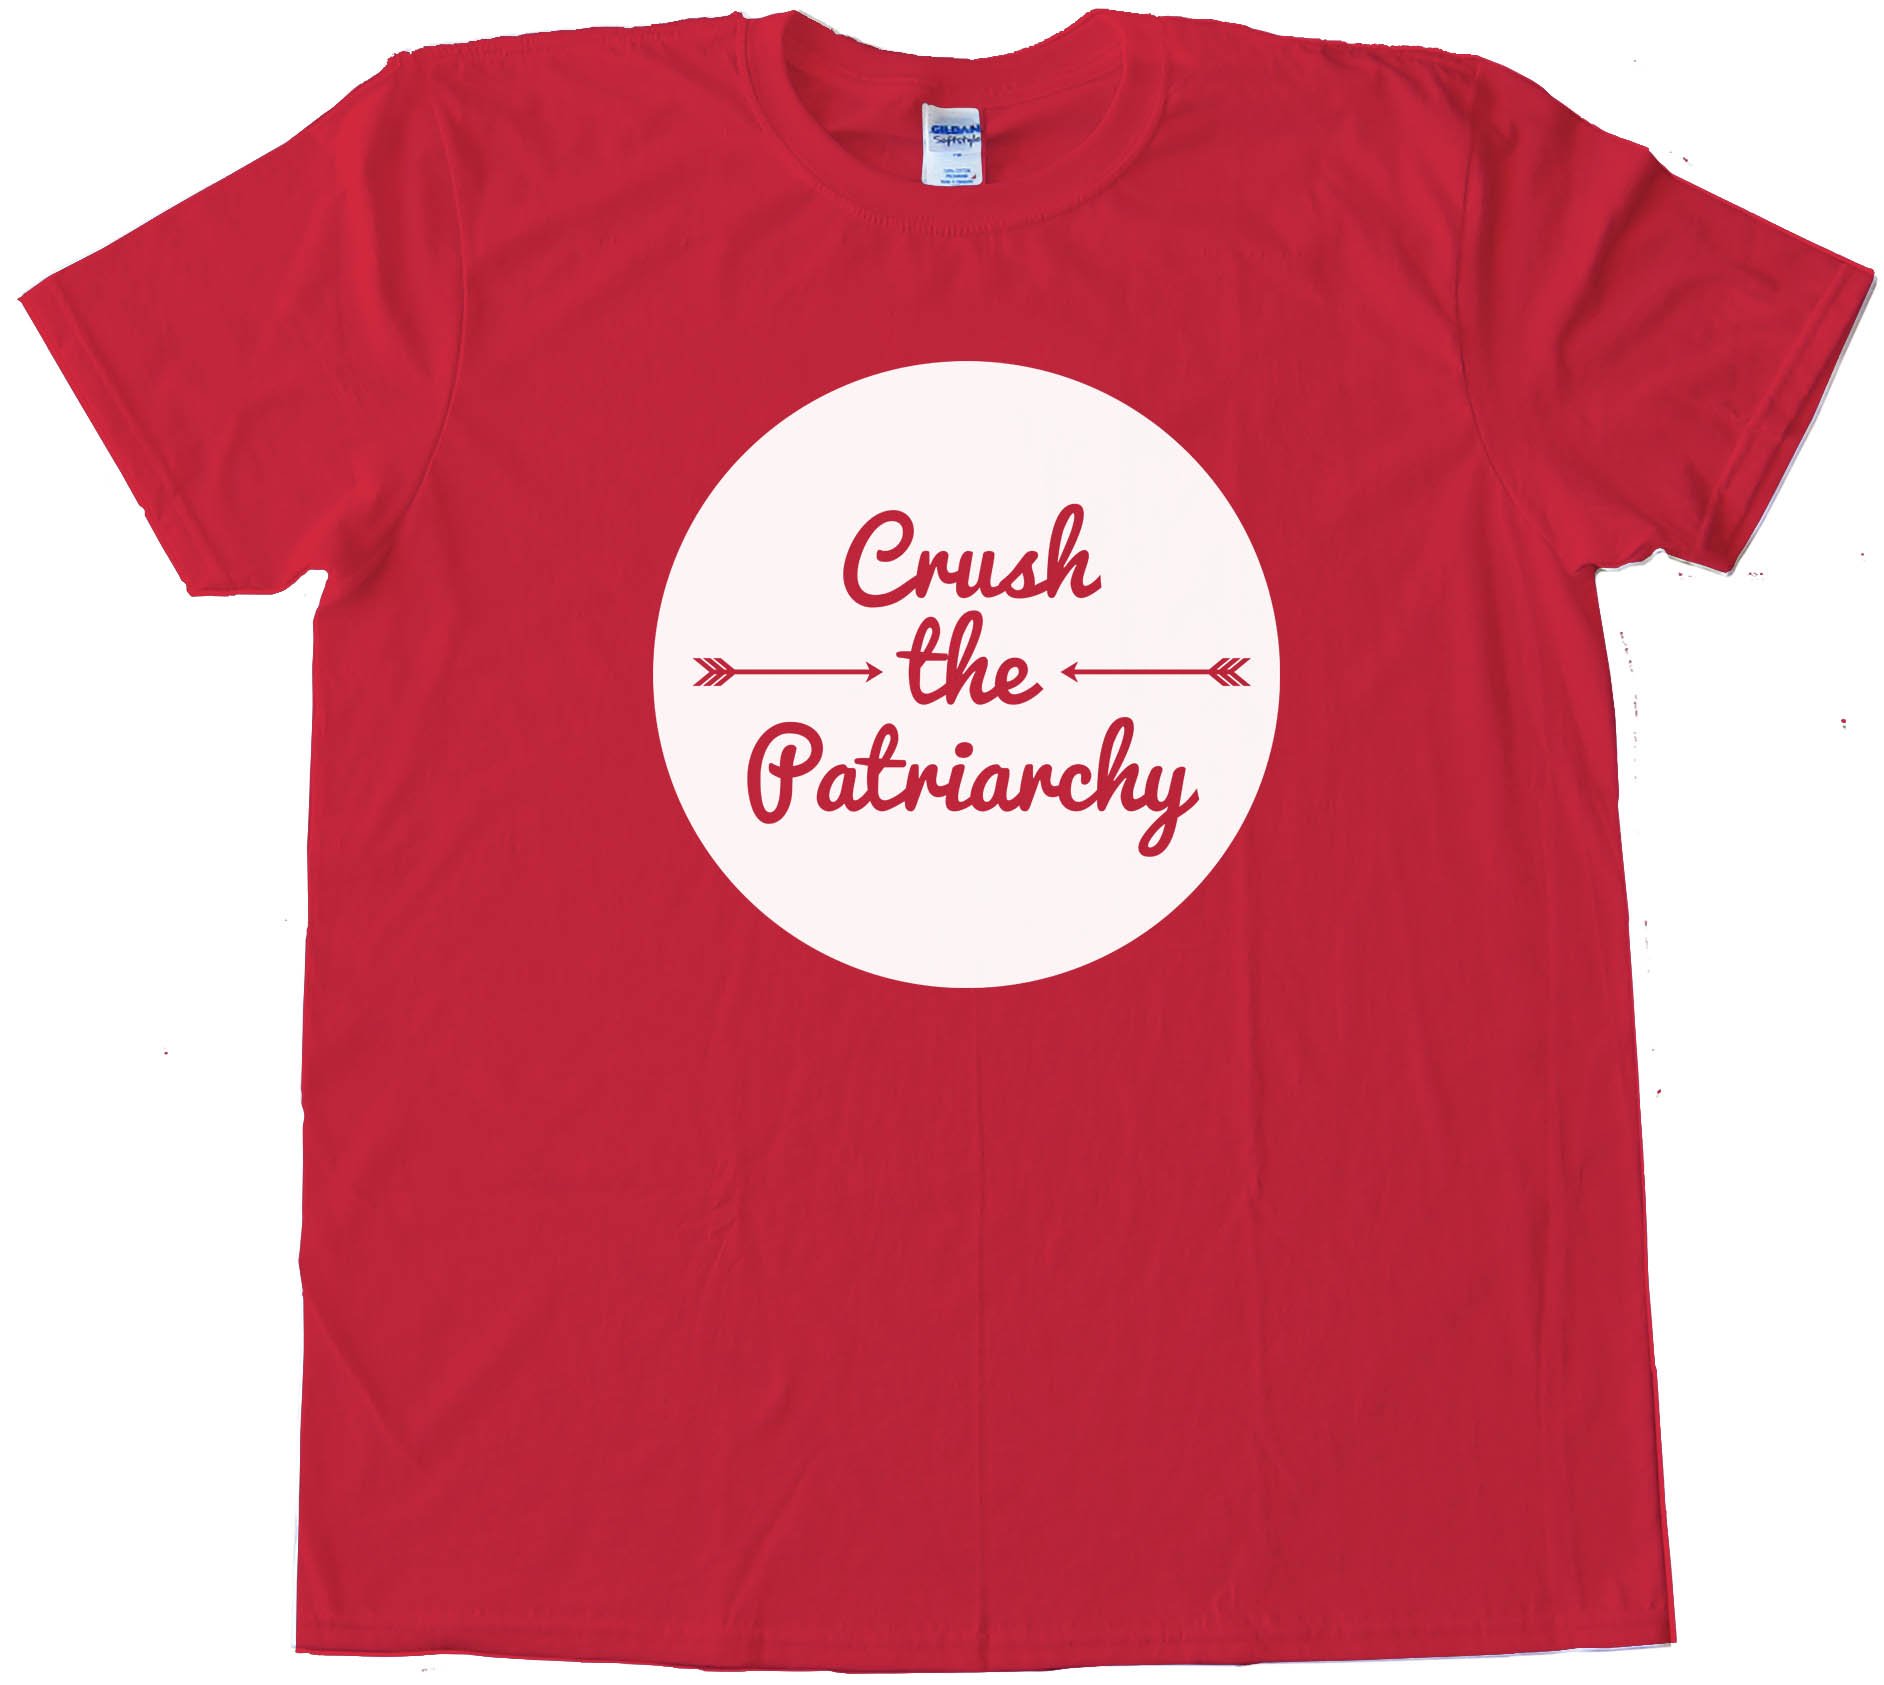 Crush The Patriarchy - Tee Shirt